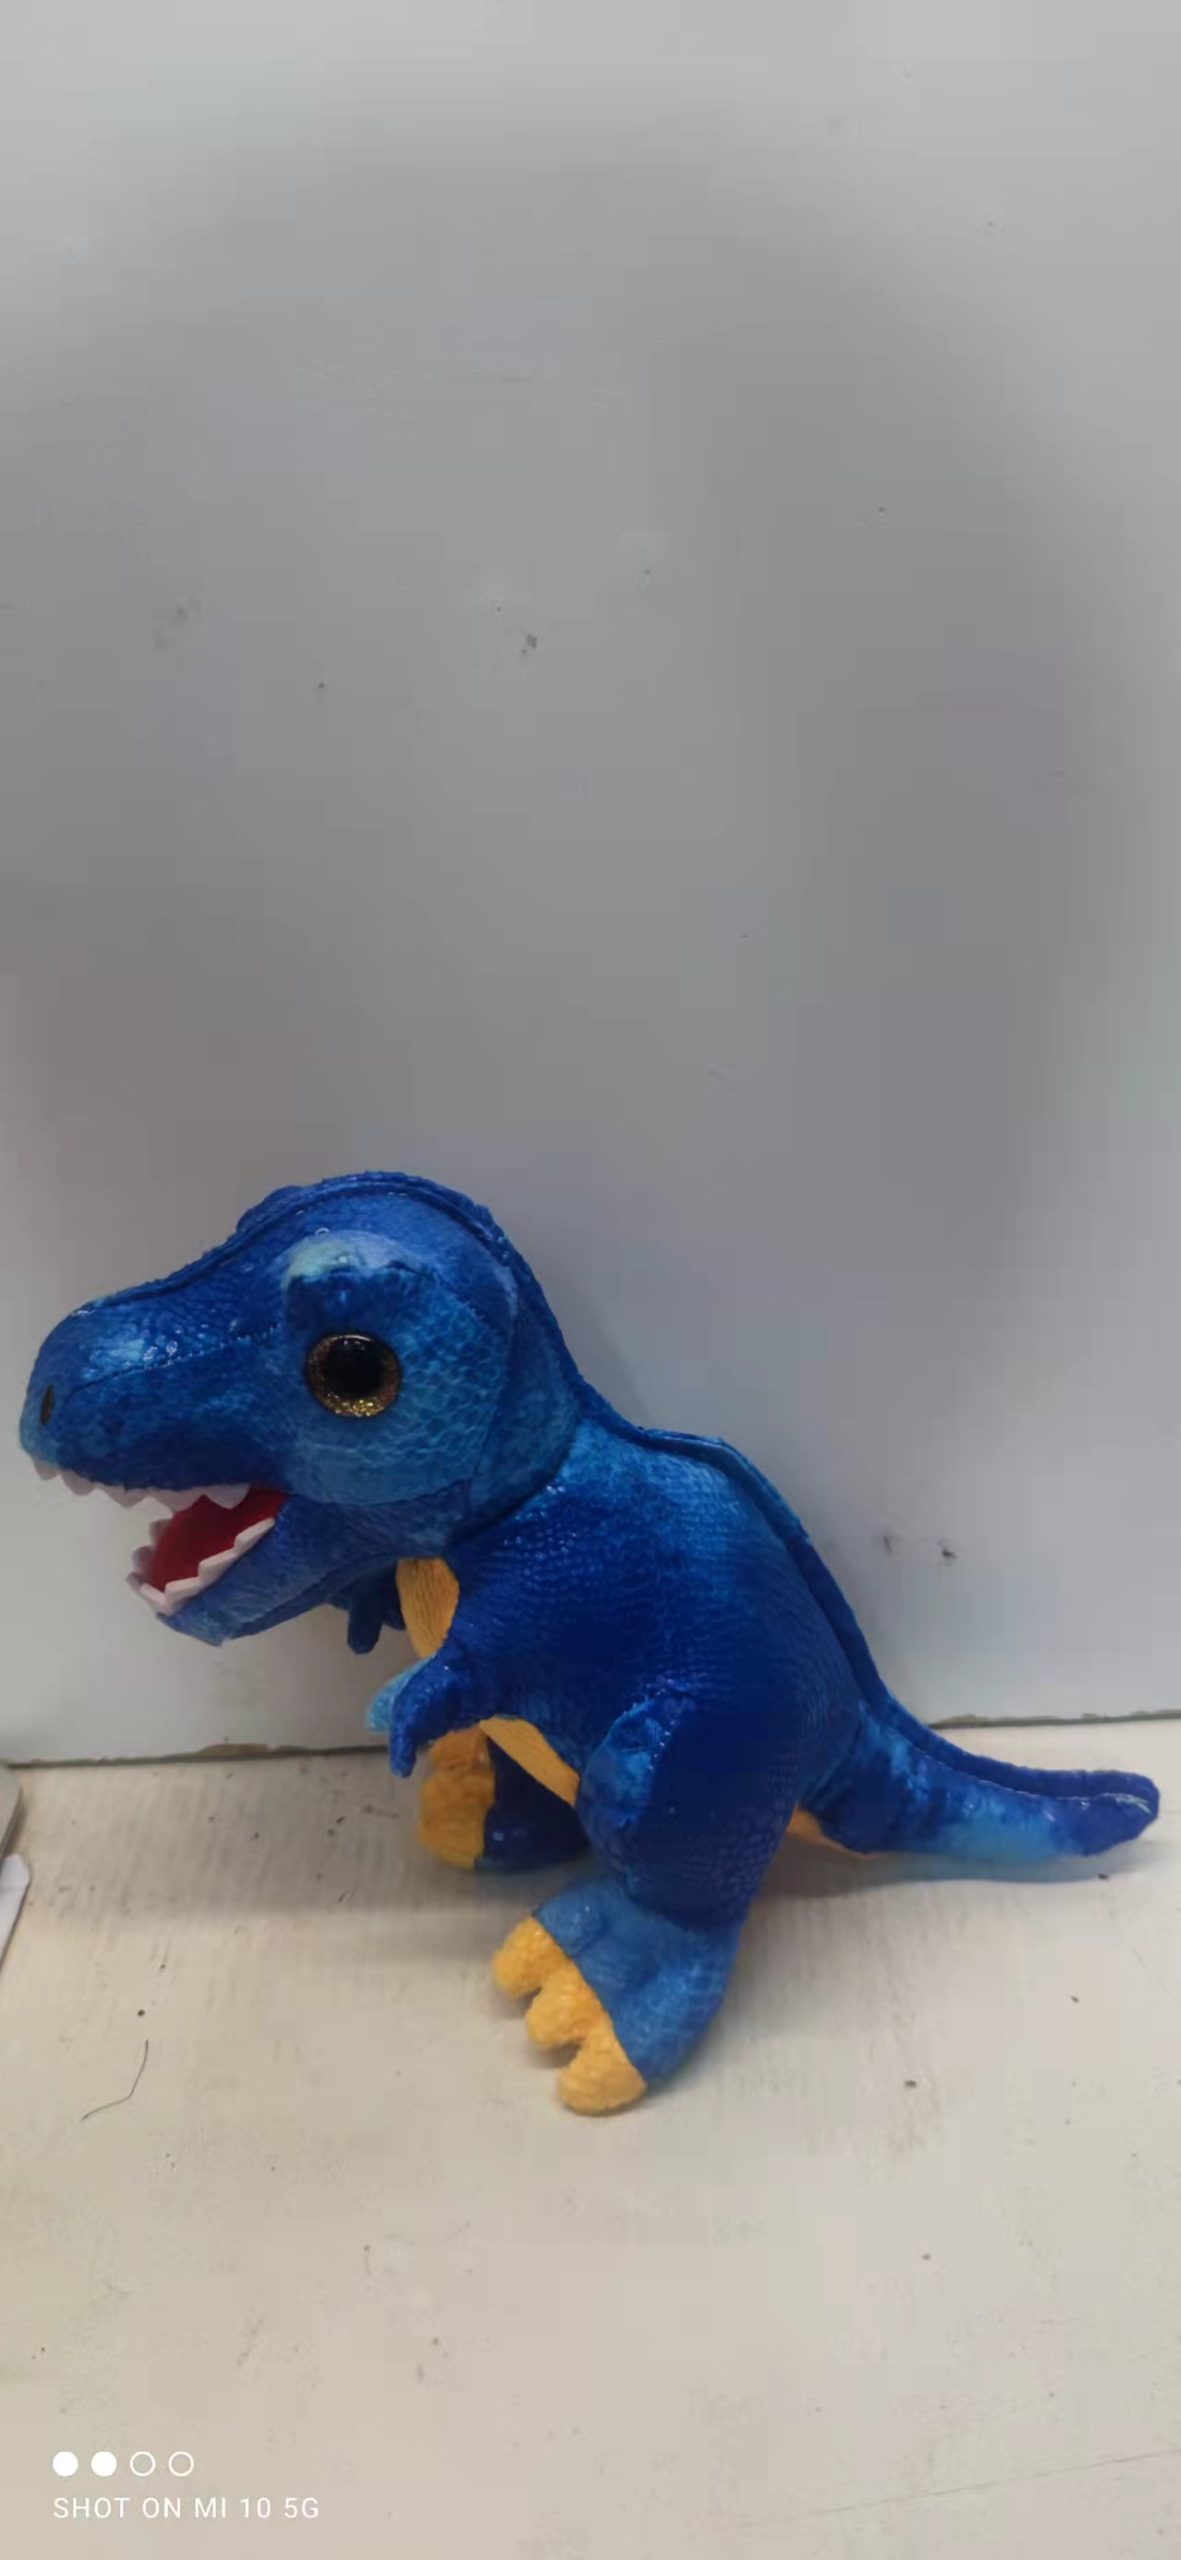 Dinosaurio Rex De Peluche - 35cm